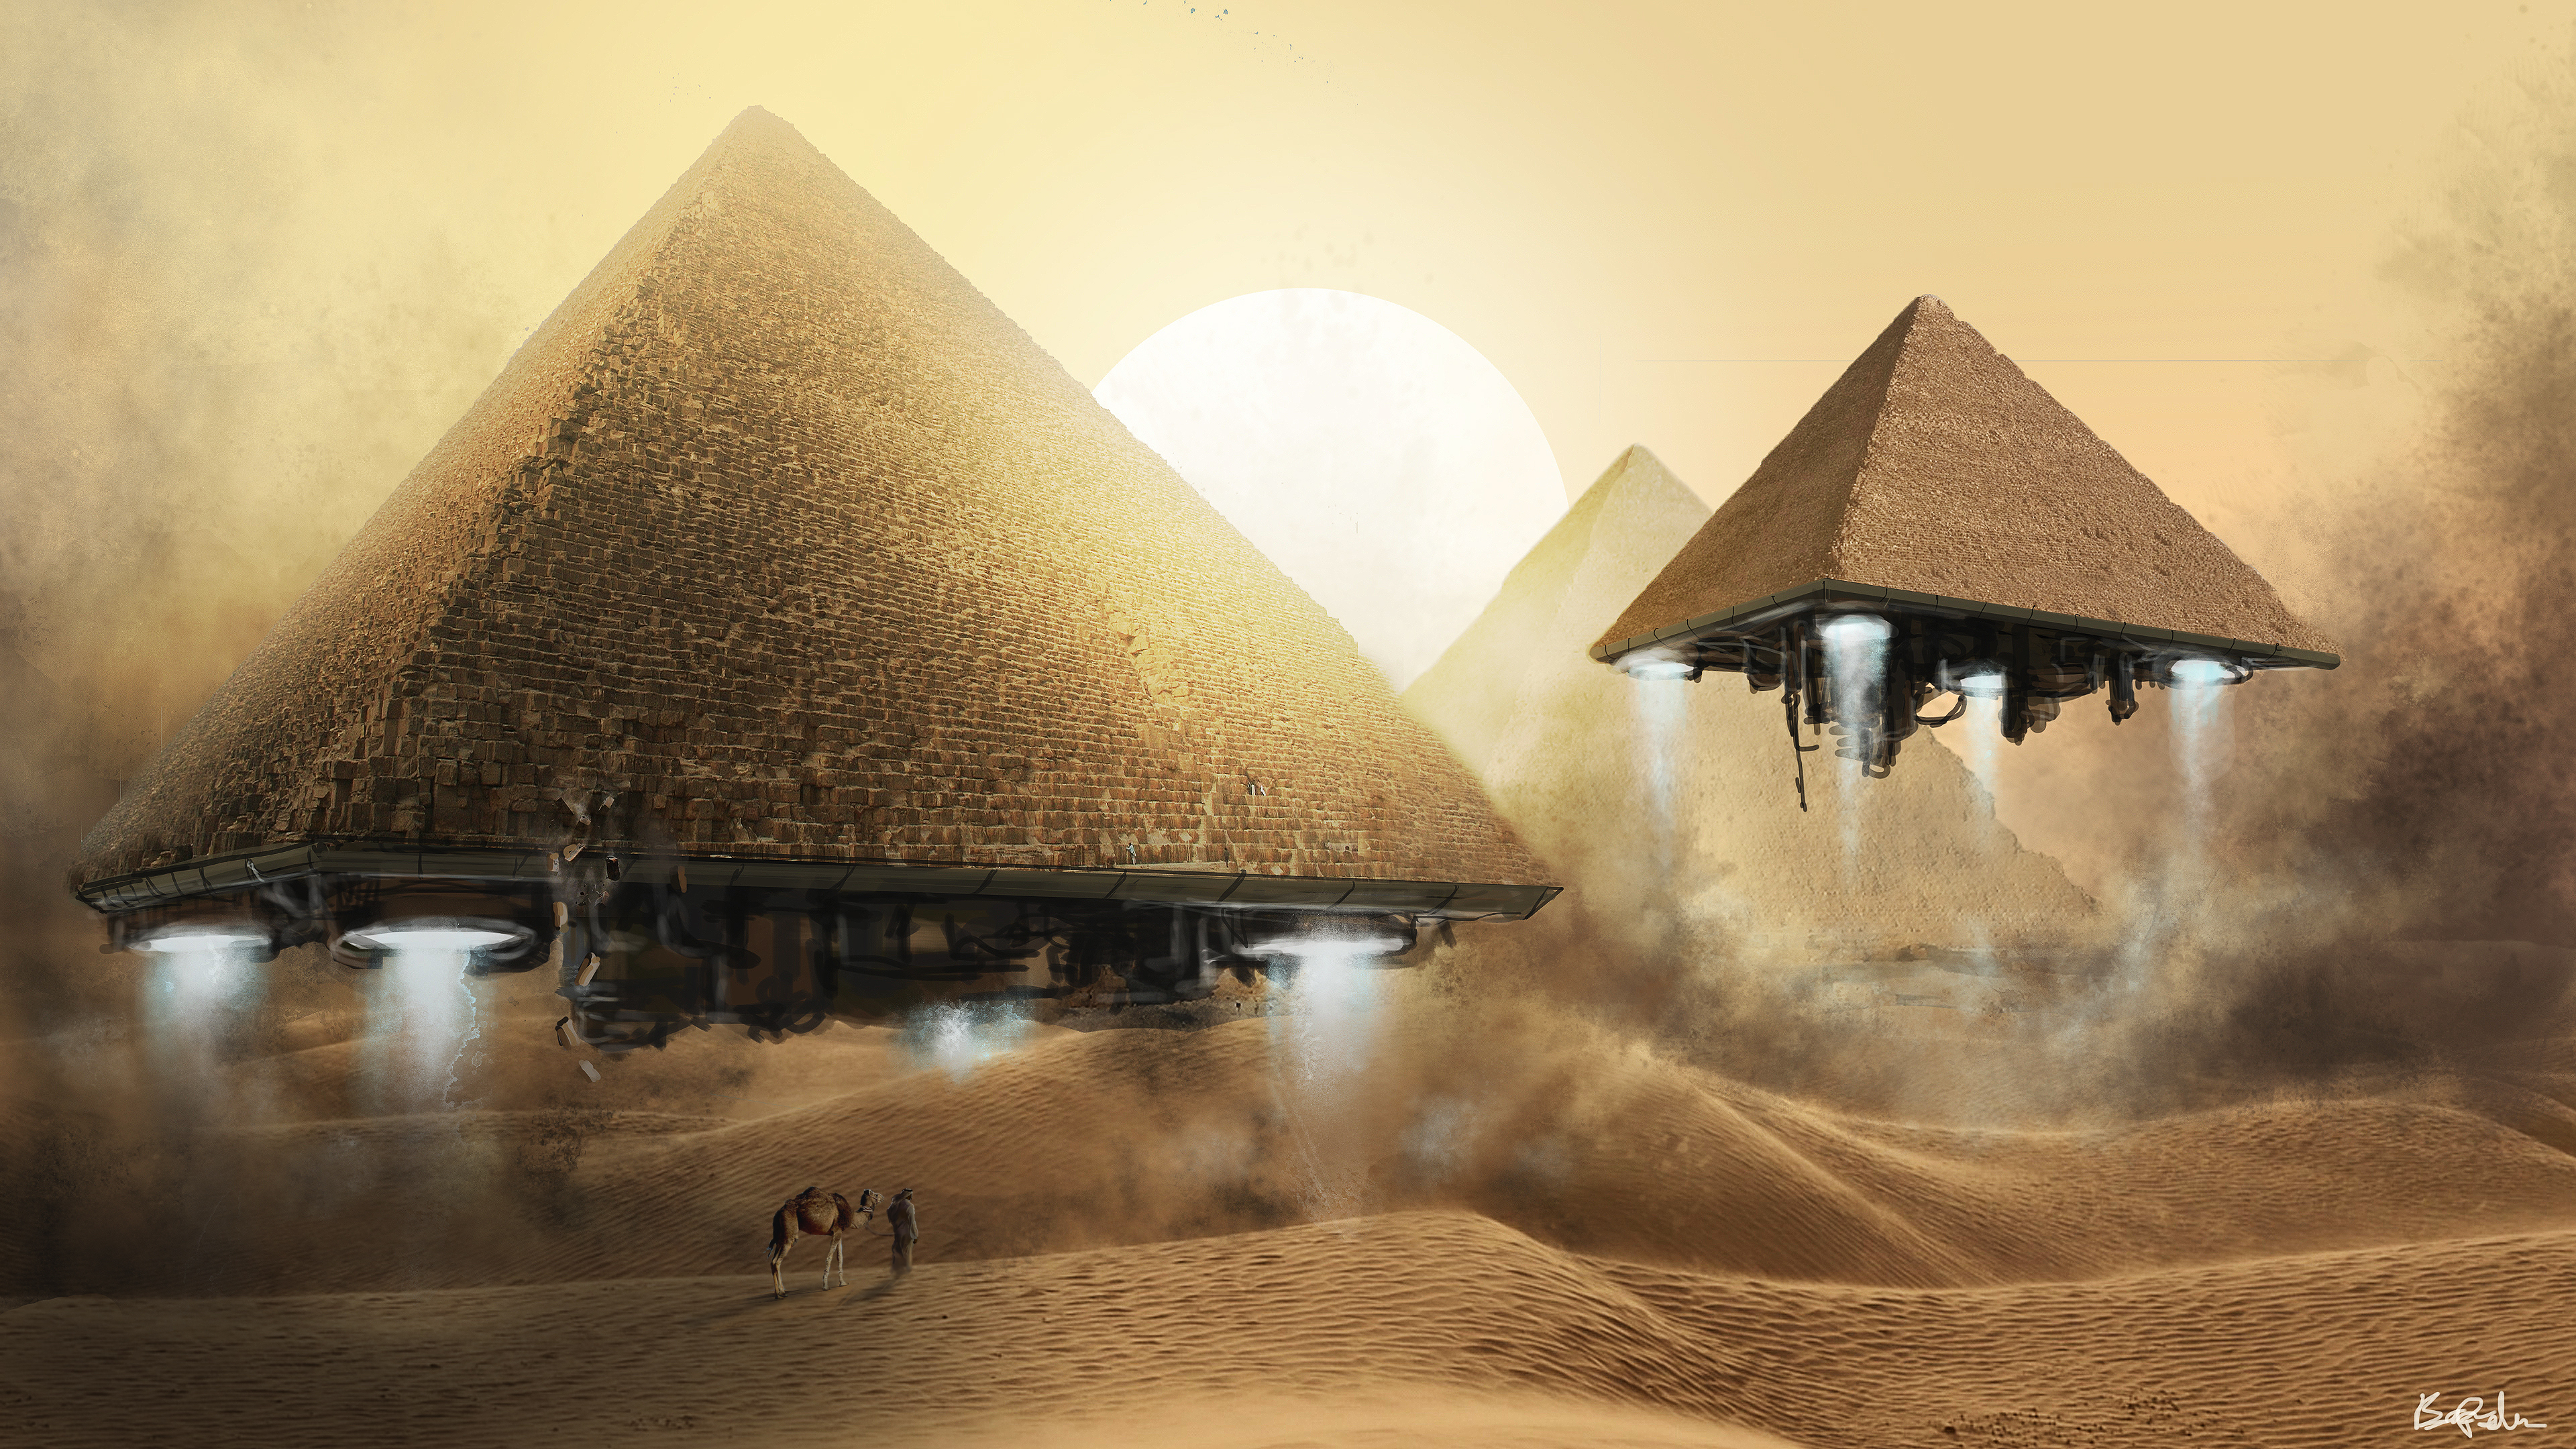 spaceship, sci fi, sand, desert, egyptian, pyramid phone wallpaper